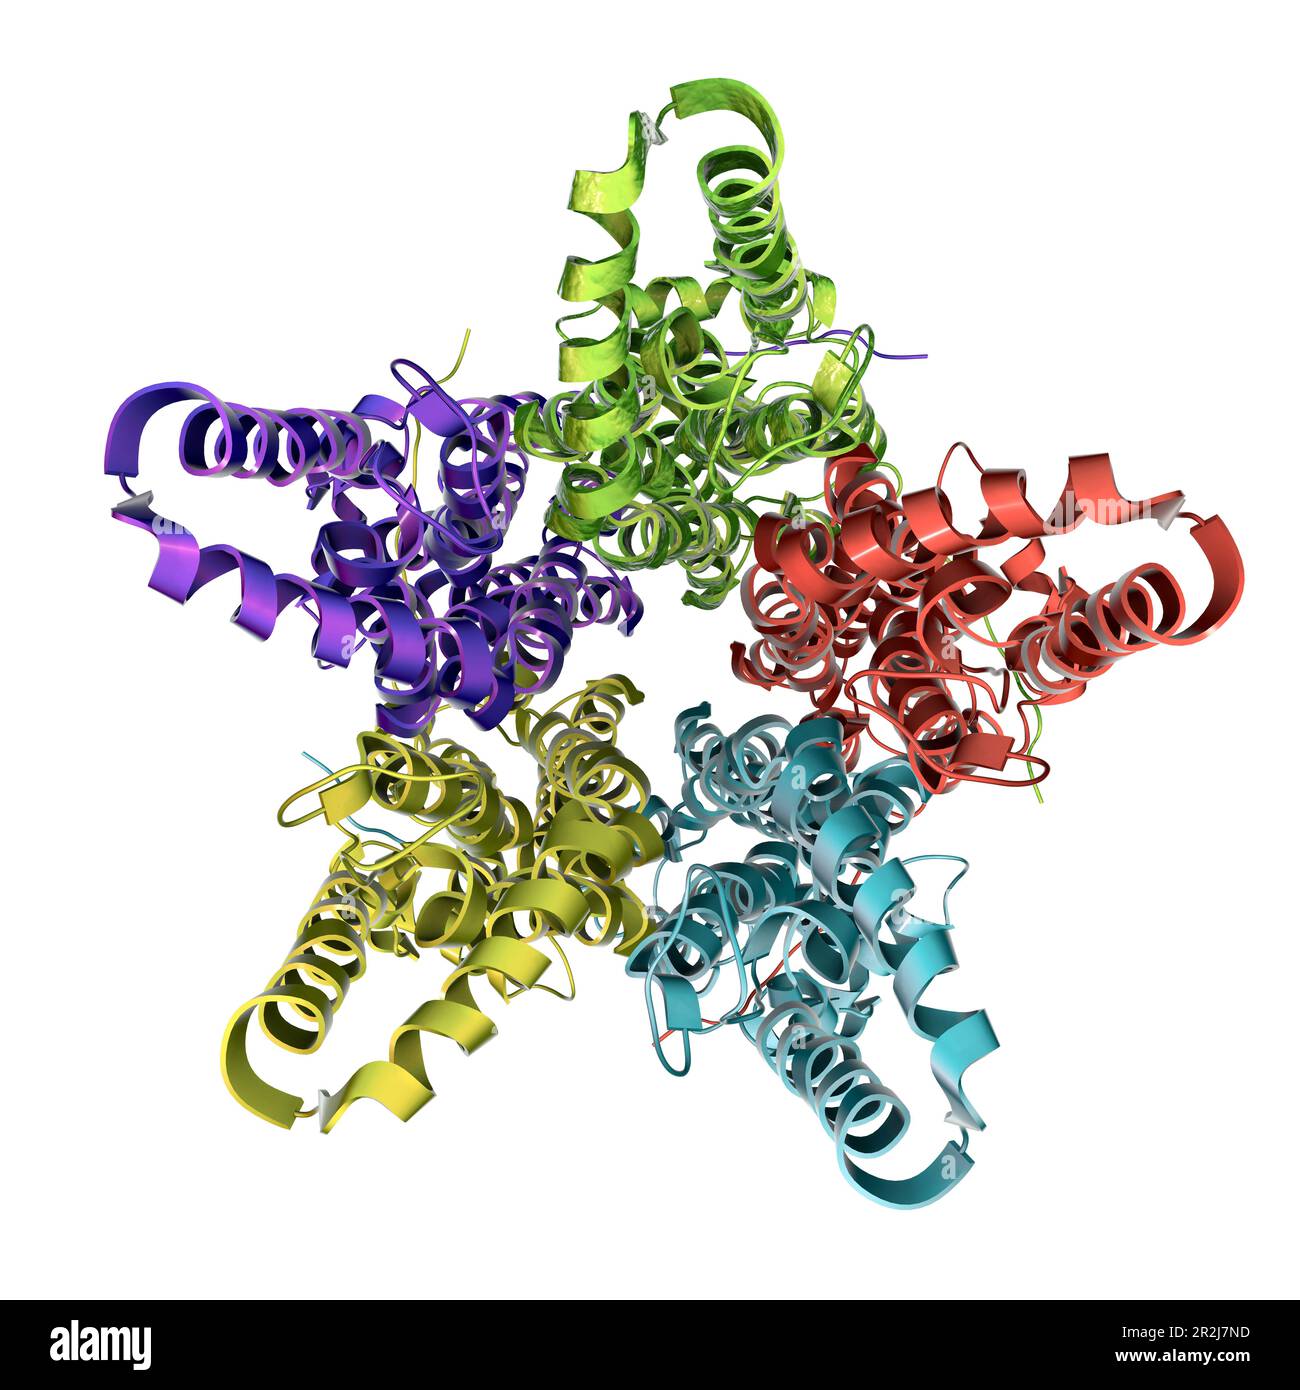 Bestrophin-1 protein molecule, illustration Stock Photo